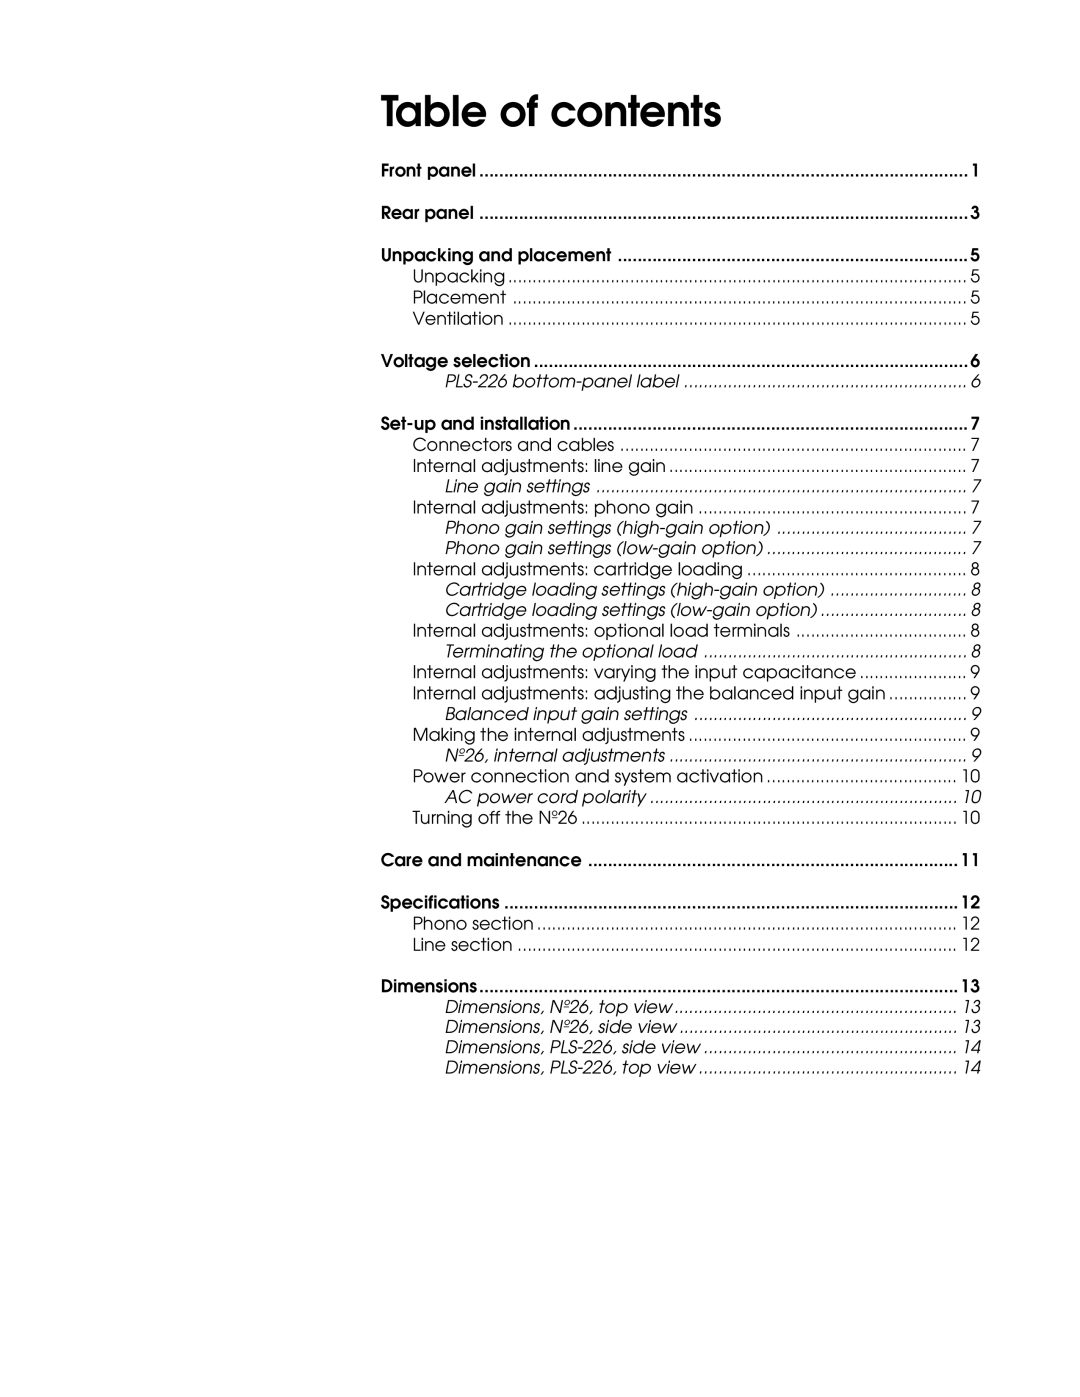 Mark Levinson N26 manual Table of contents, Phono gain settings high-gainoption, Phono gain settings low-gainoption 